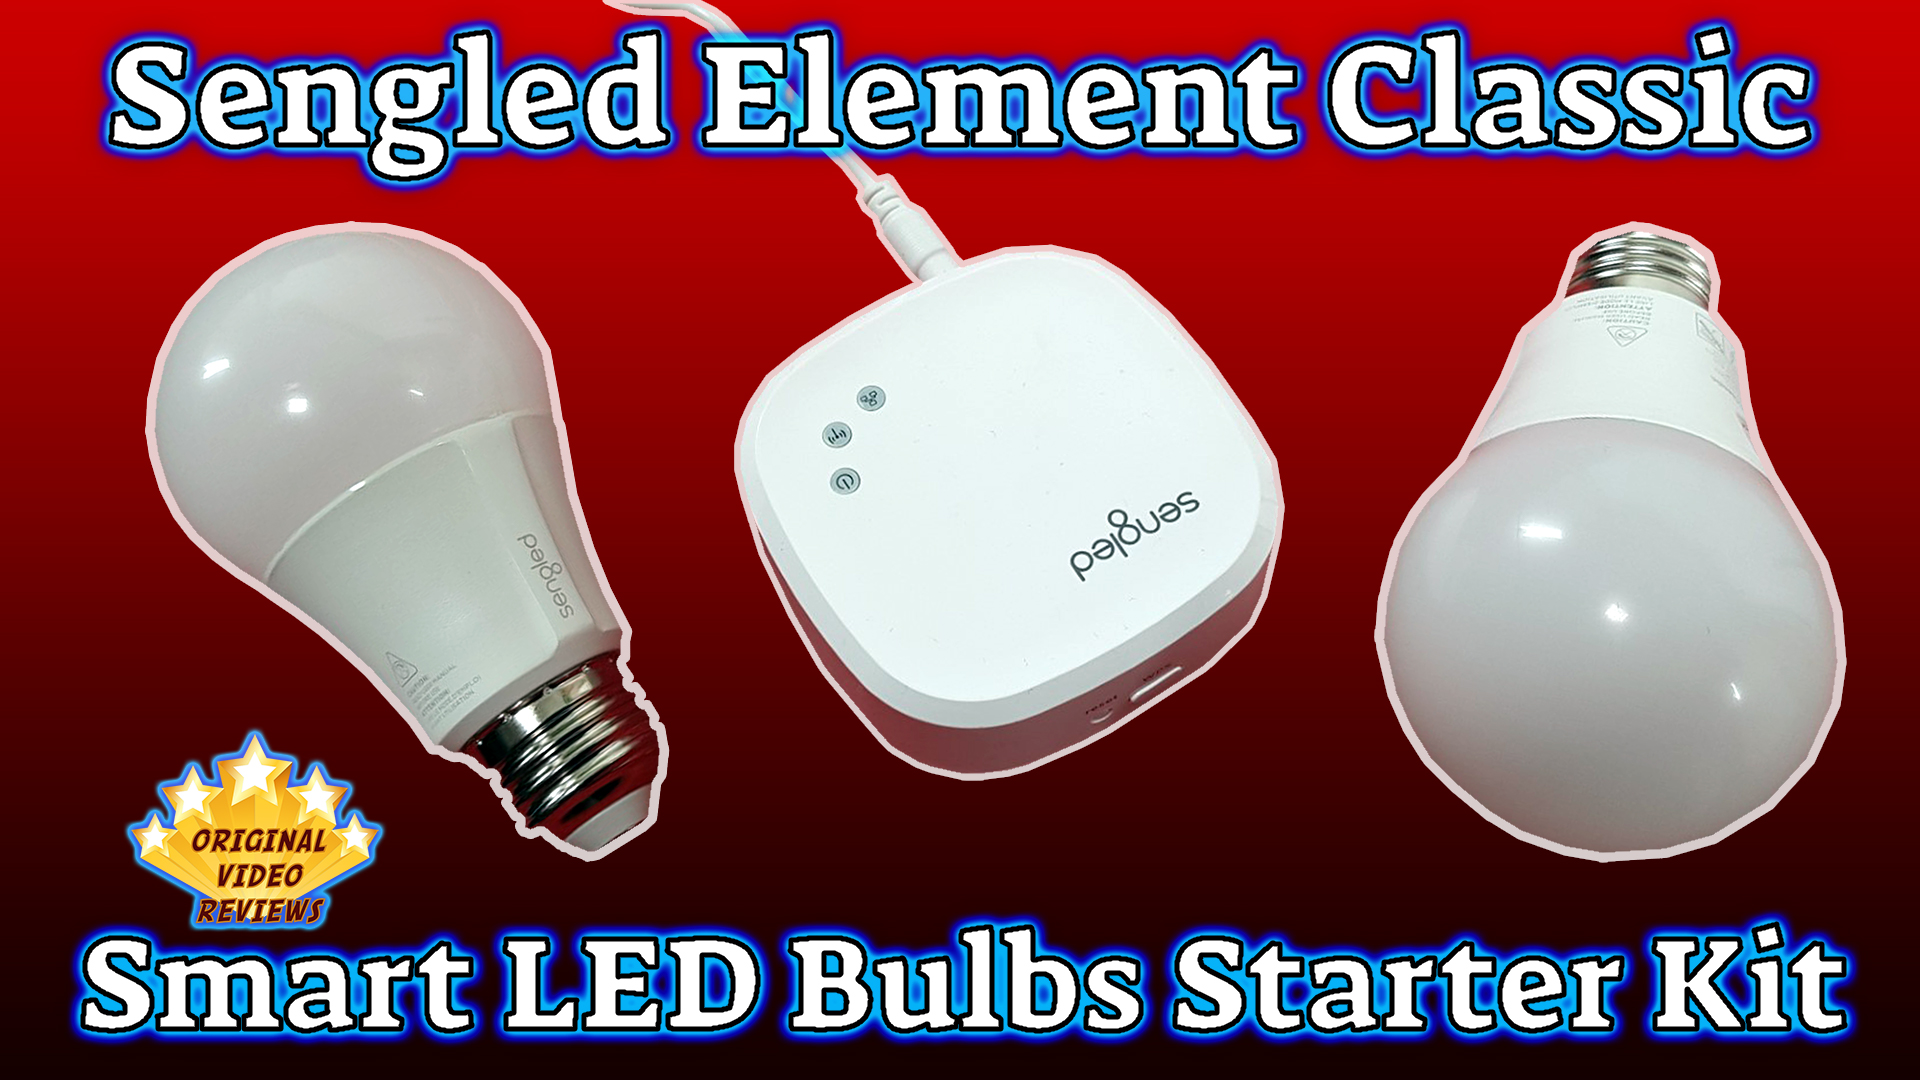 Sengled Element Classic - Smart LED Bulbs Starter Kit (Thumbnail)